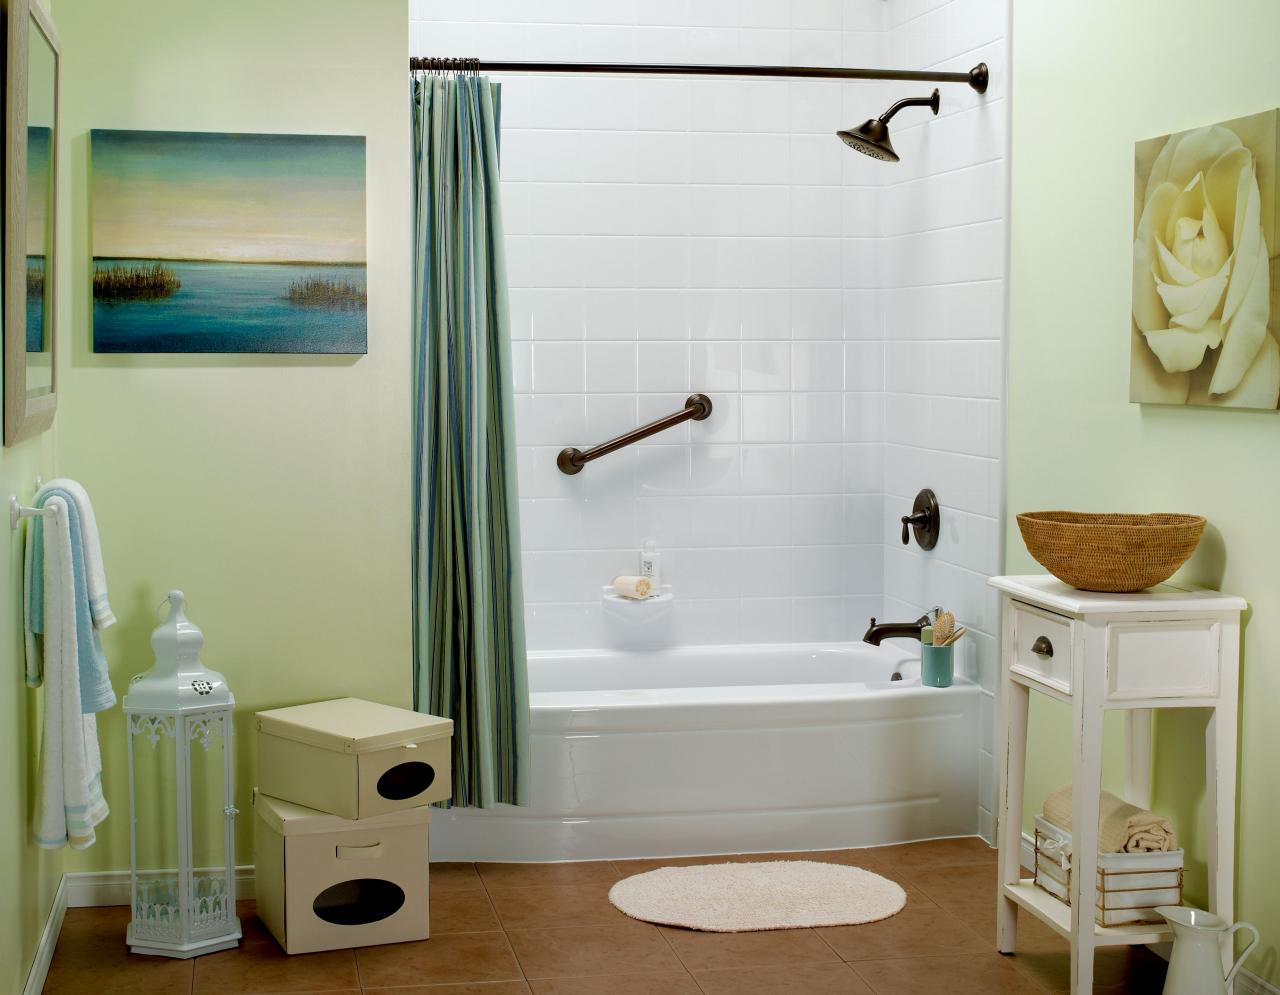 Before & After Tub Bath fitter, Bathrooms remodel, Bathtub design